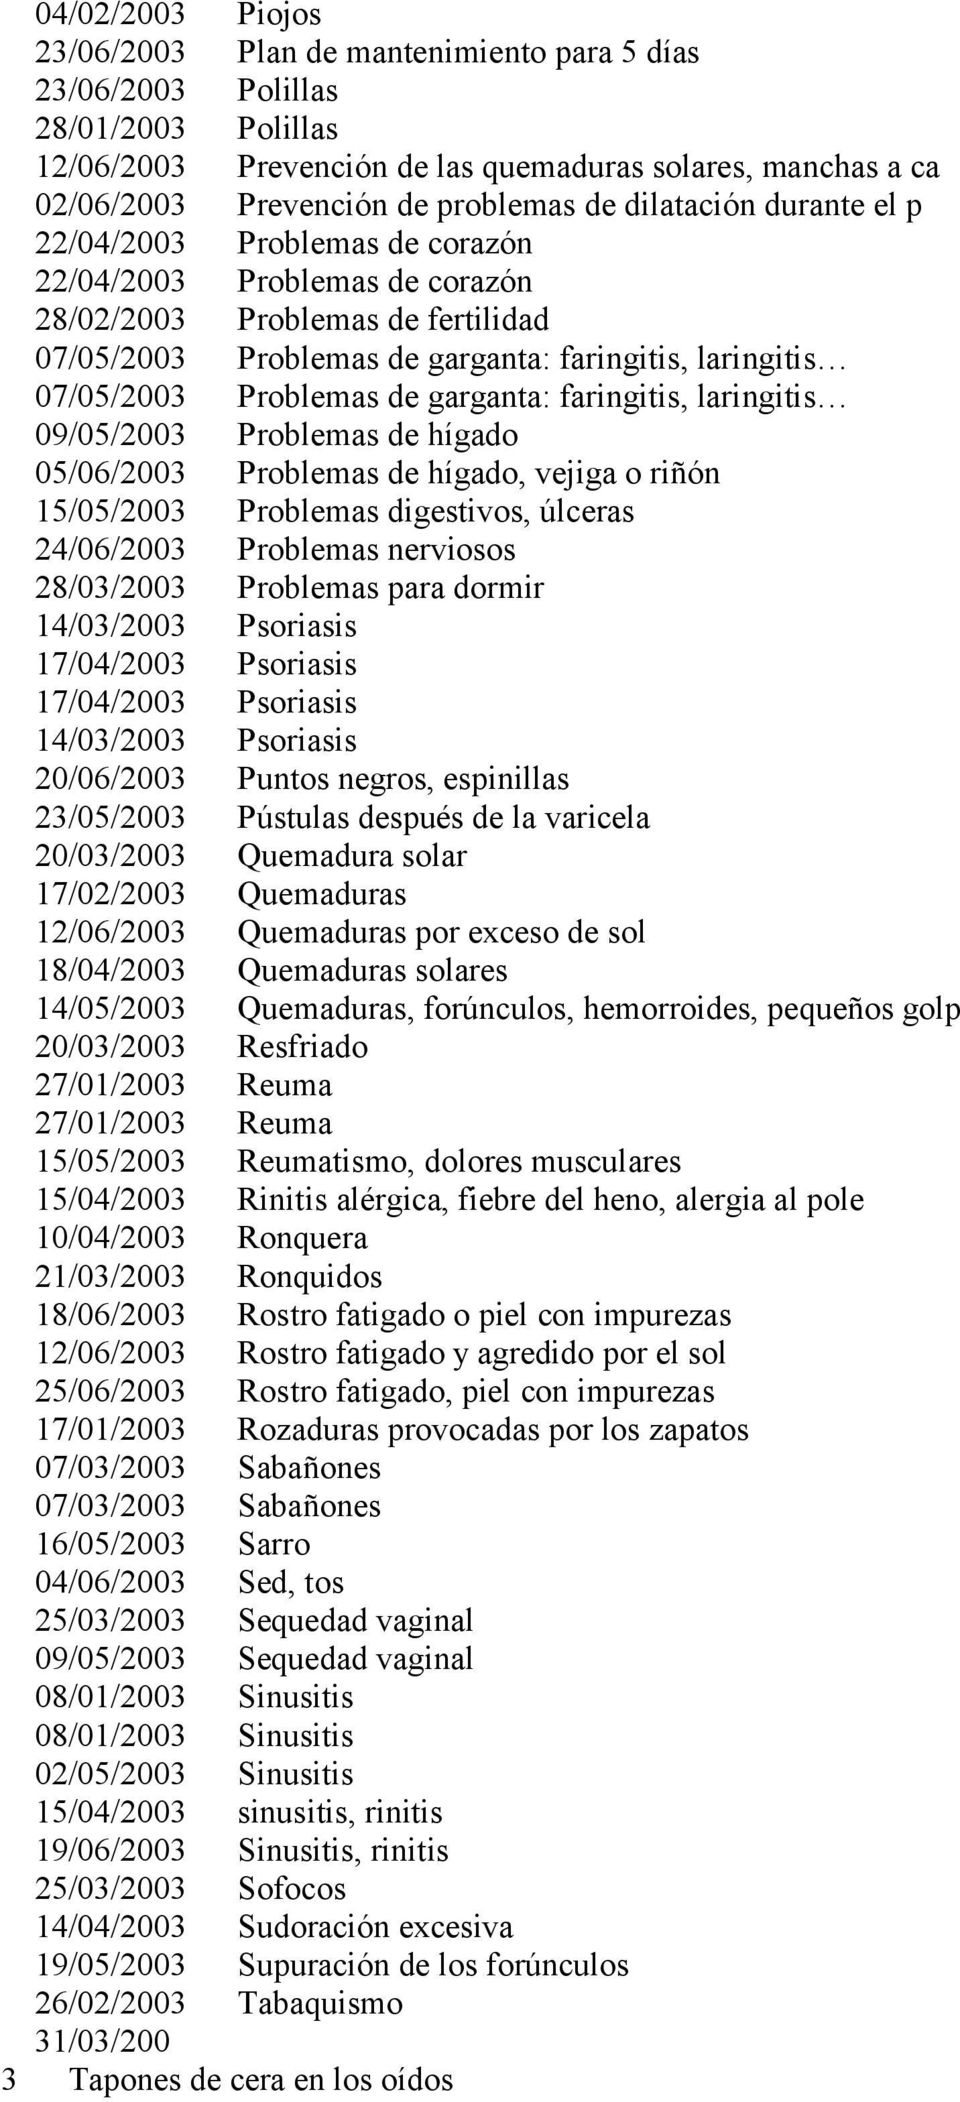 Problemas de garganta: faringitis, laringitis 09/05/2003 Problemas de hígado 05/06/2003 Problemas de hígado, vejiga o riñón 15/05/2003 Problemas digestivos, úlceras 24/06/2003 Problemas nerviosos